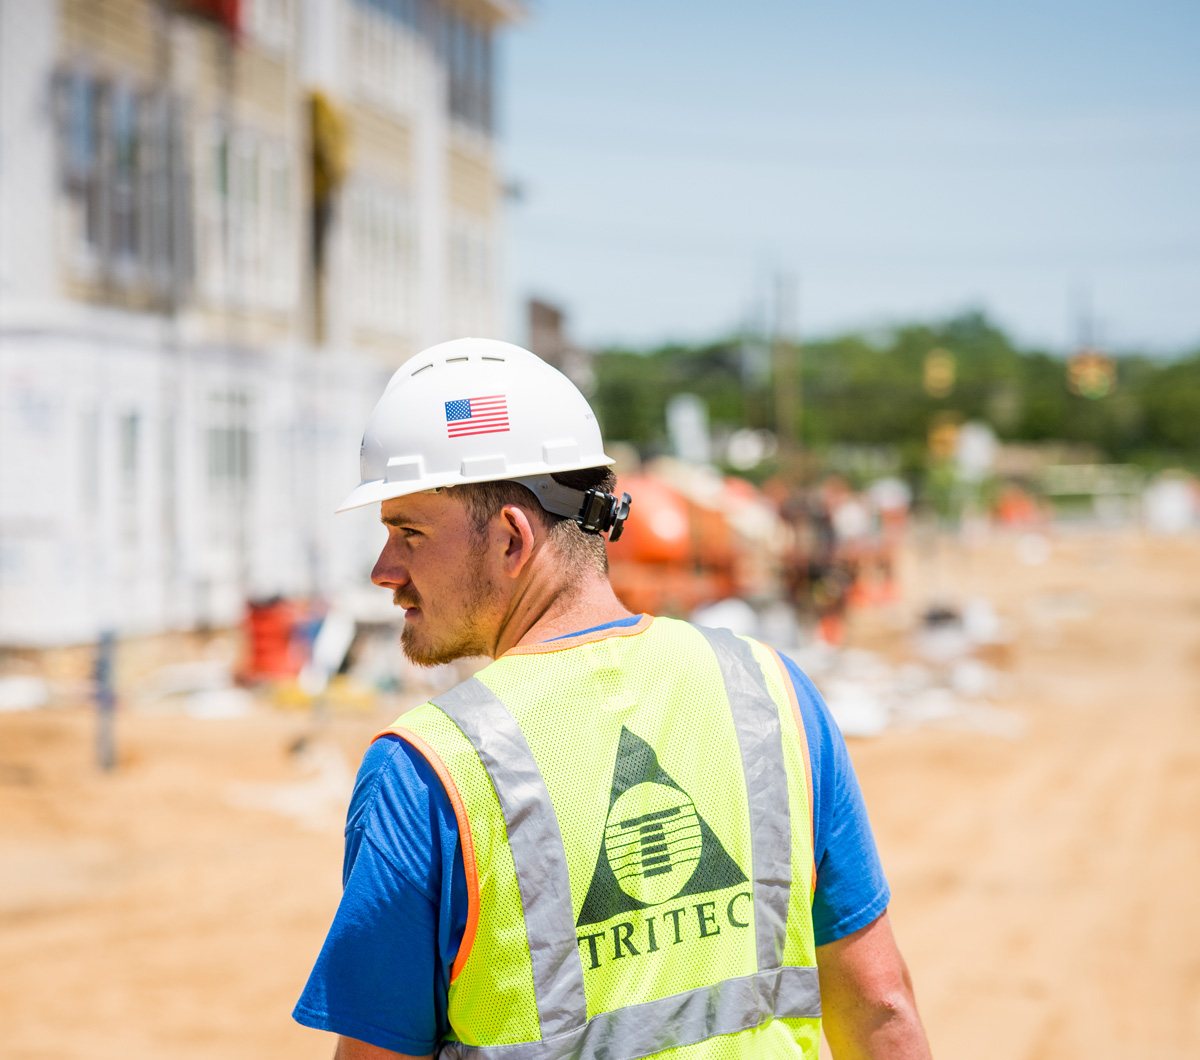 Construction worker wearing a TRITEC vest